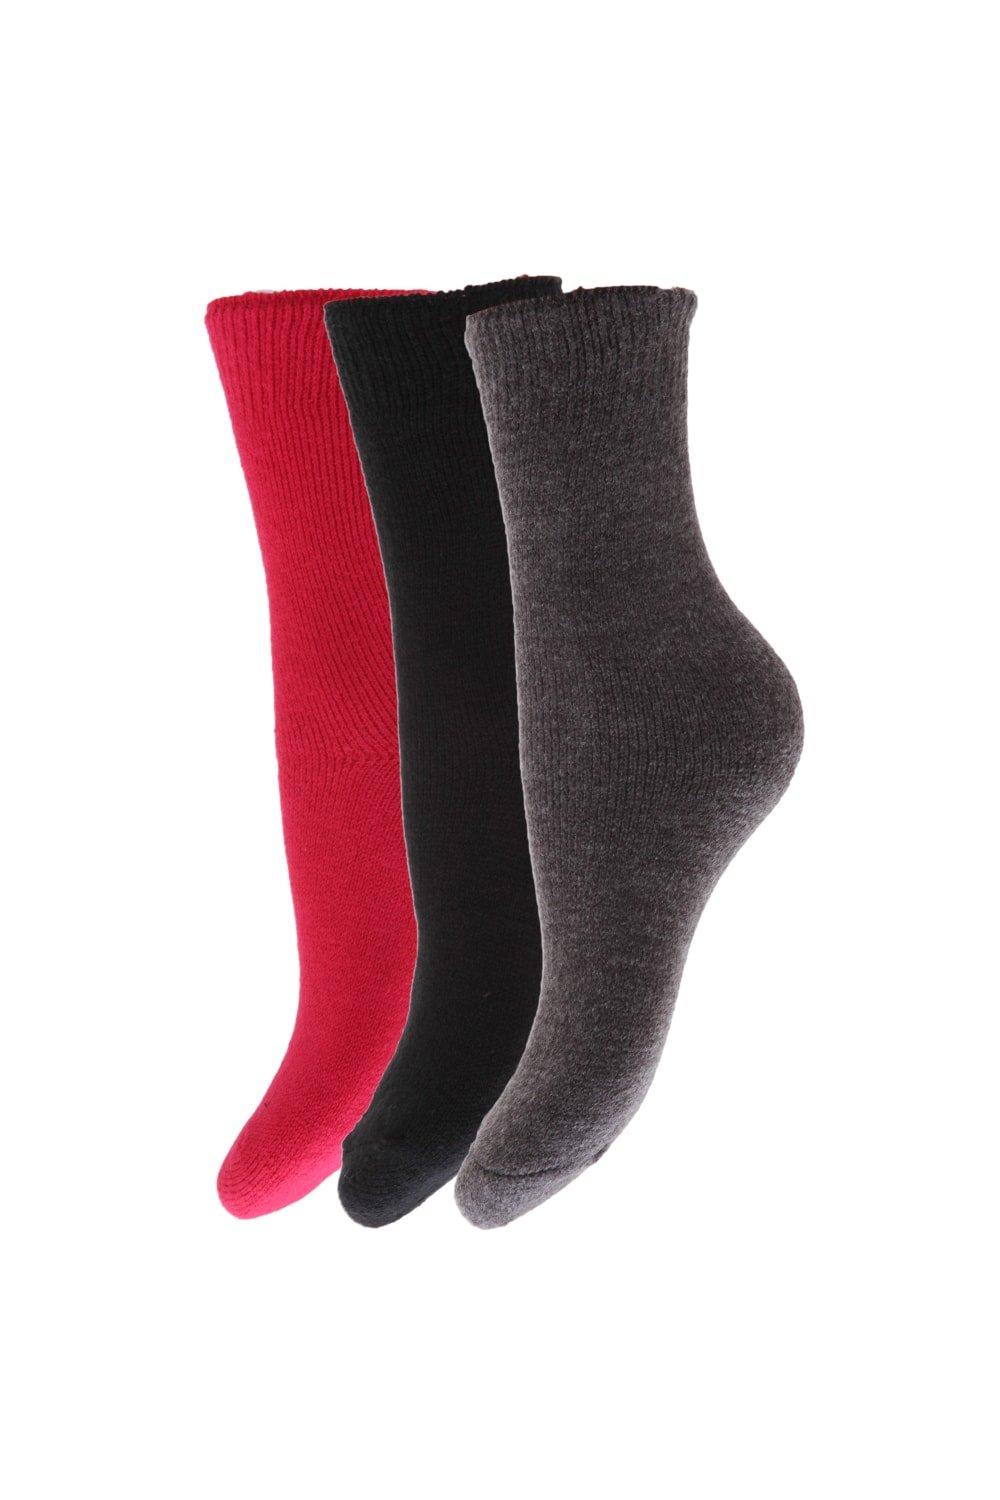 Winter Thermal Socks (Pack Of 3)